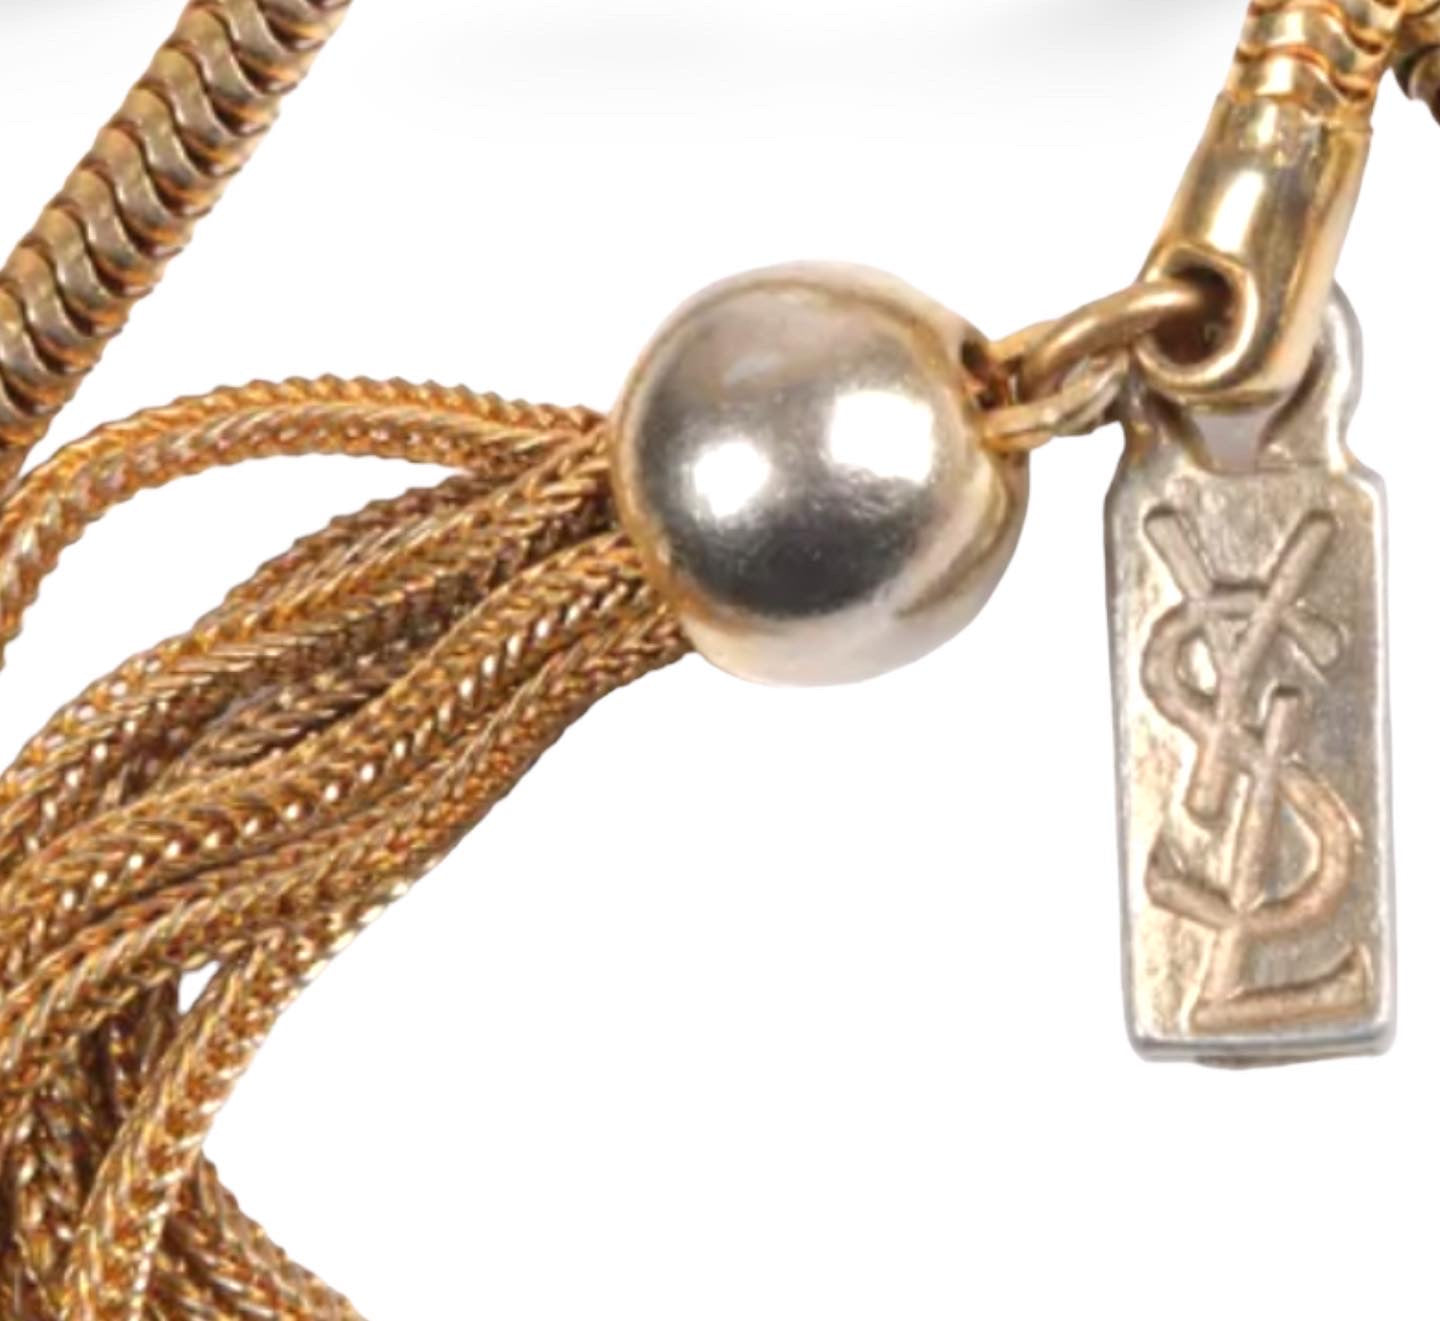 Yves Saint Laurent Lariat Gold Tone Metal Fringe Necklace |53” Total Length|